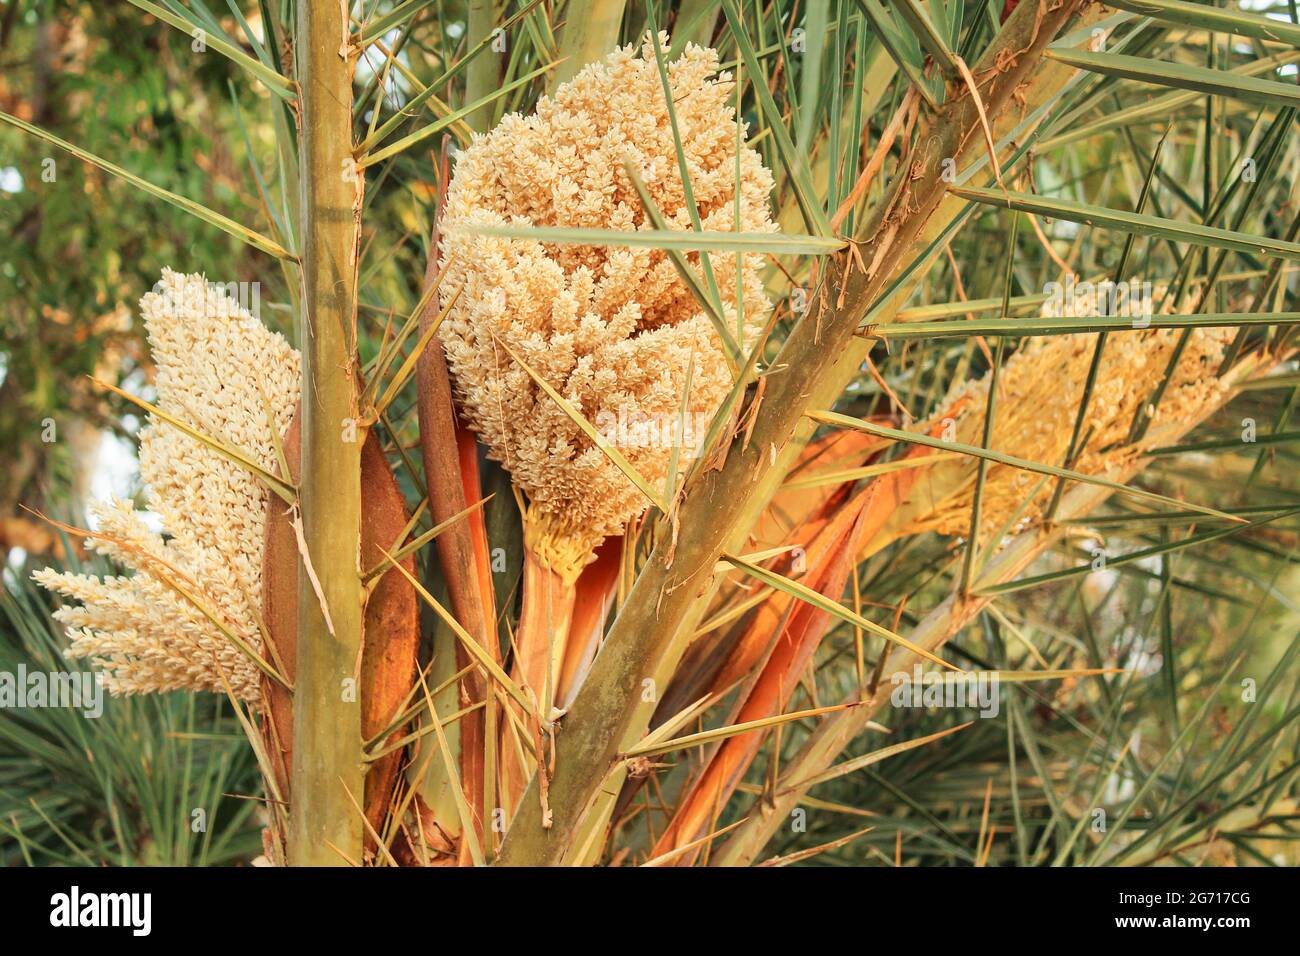 Date palm flower image Stock Photo - Alamy